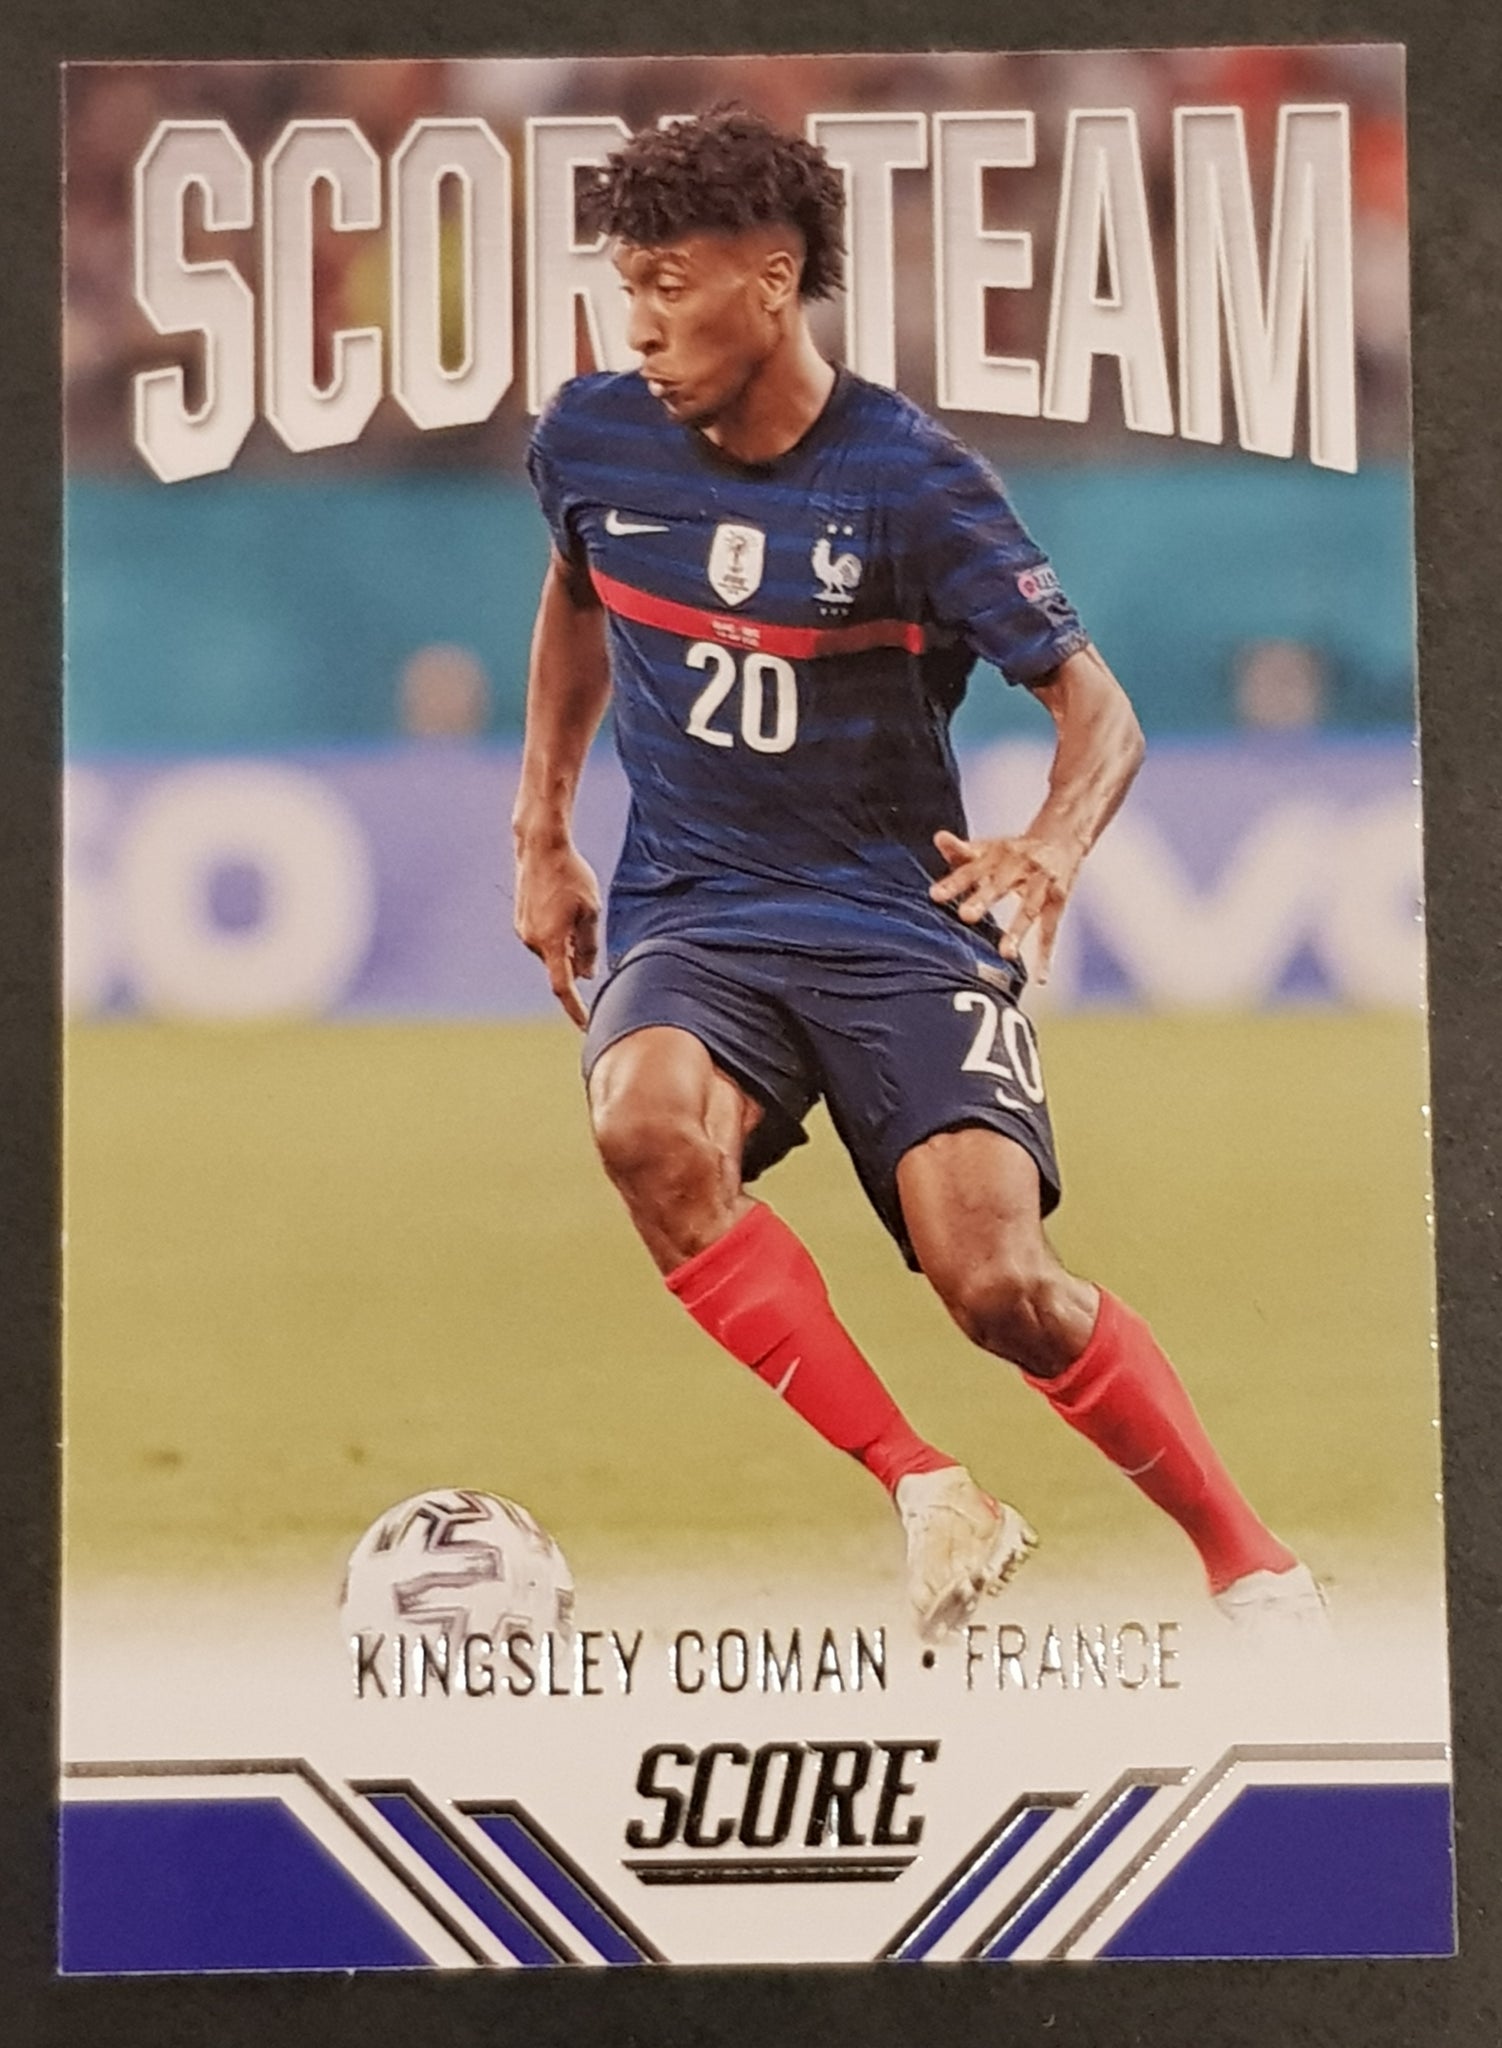 2021-22 Panini Score FIFA Score Team Kingsley Coman #13 Trading Card